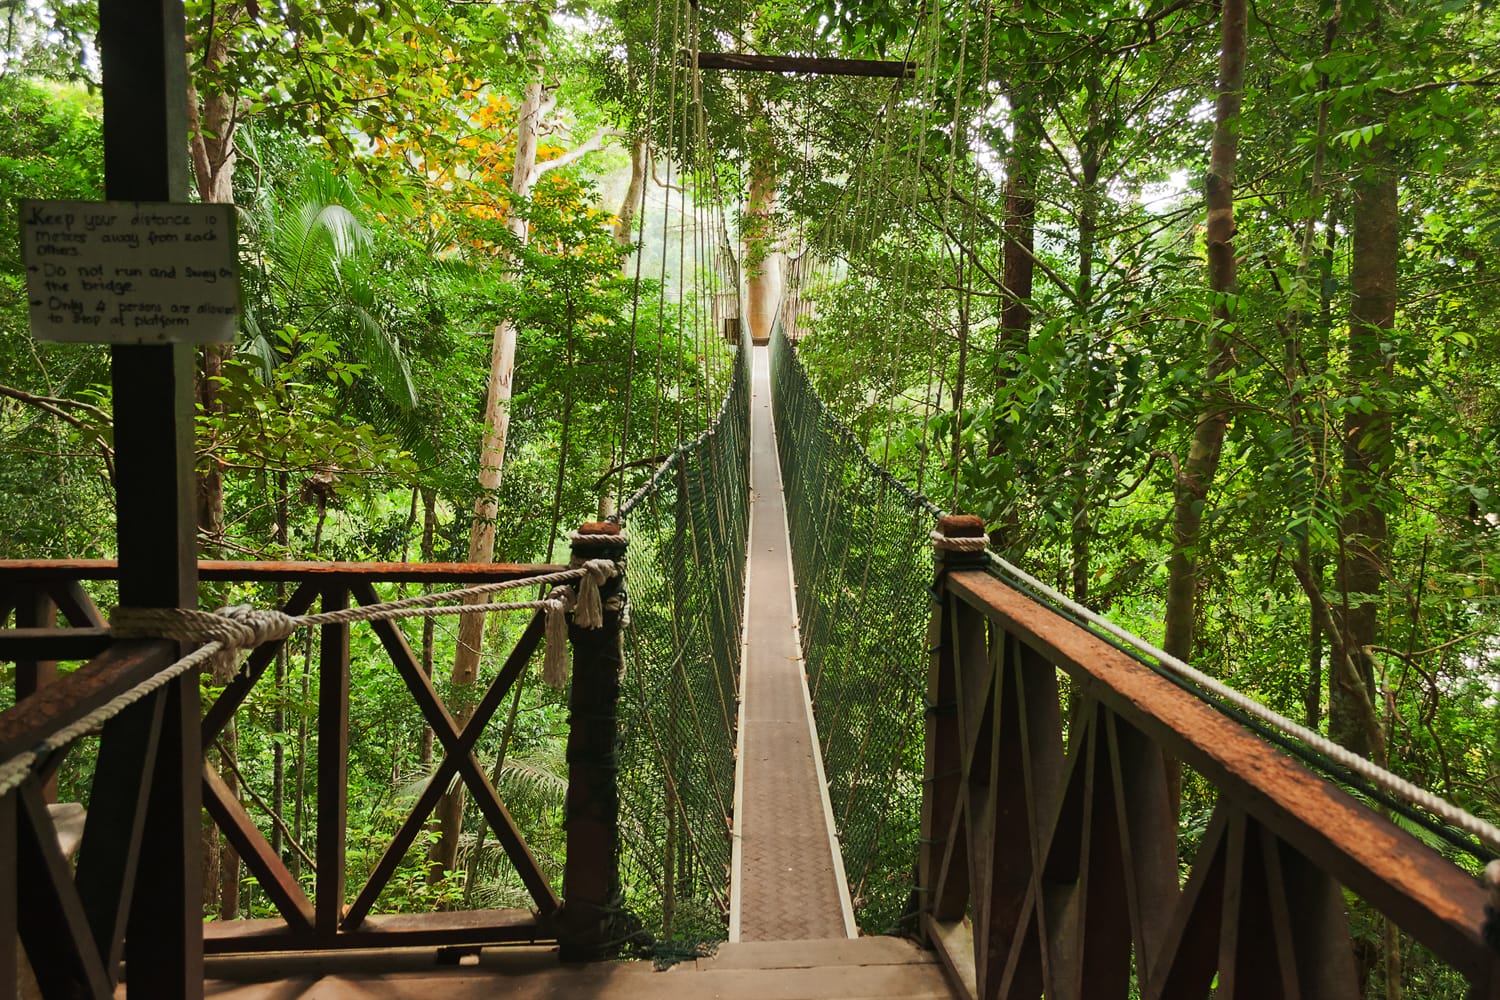 Canopy walkway at Taman Negara National Park in Penang, Malaysia